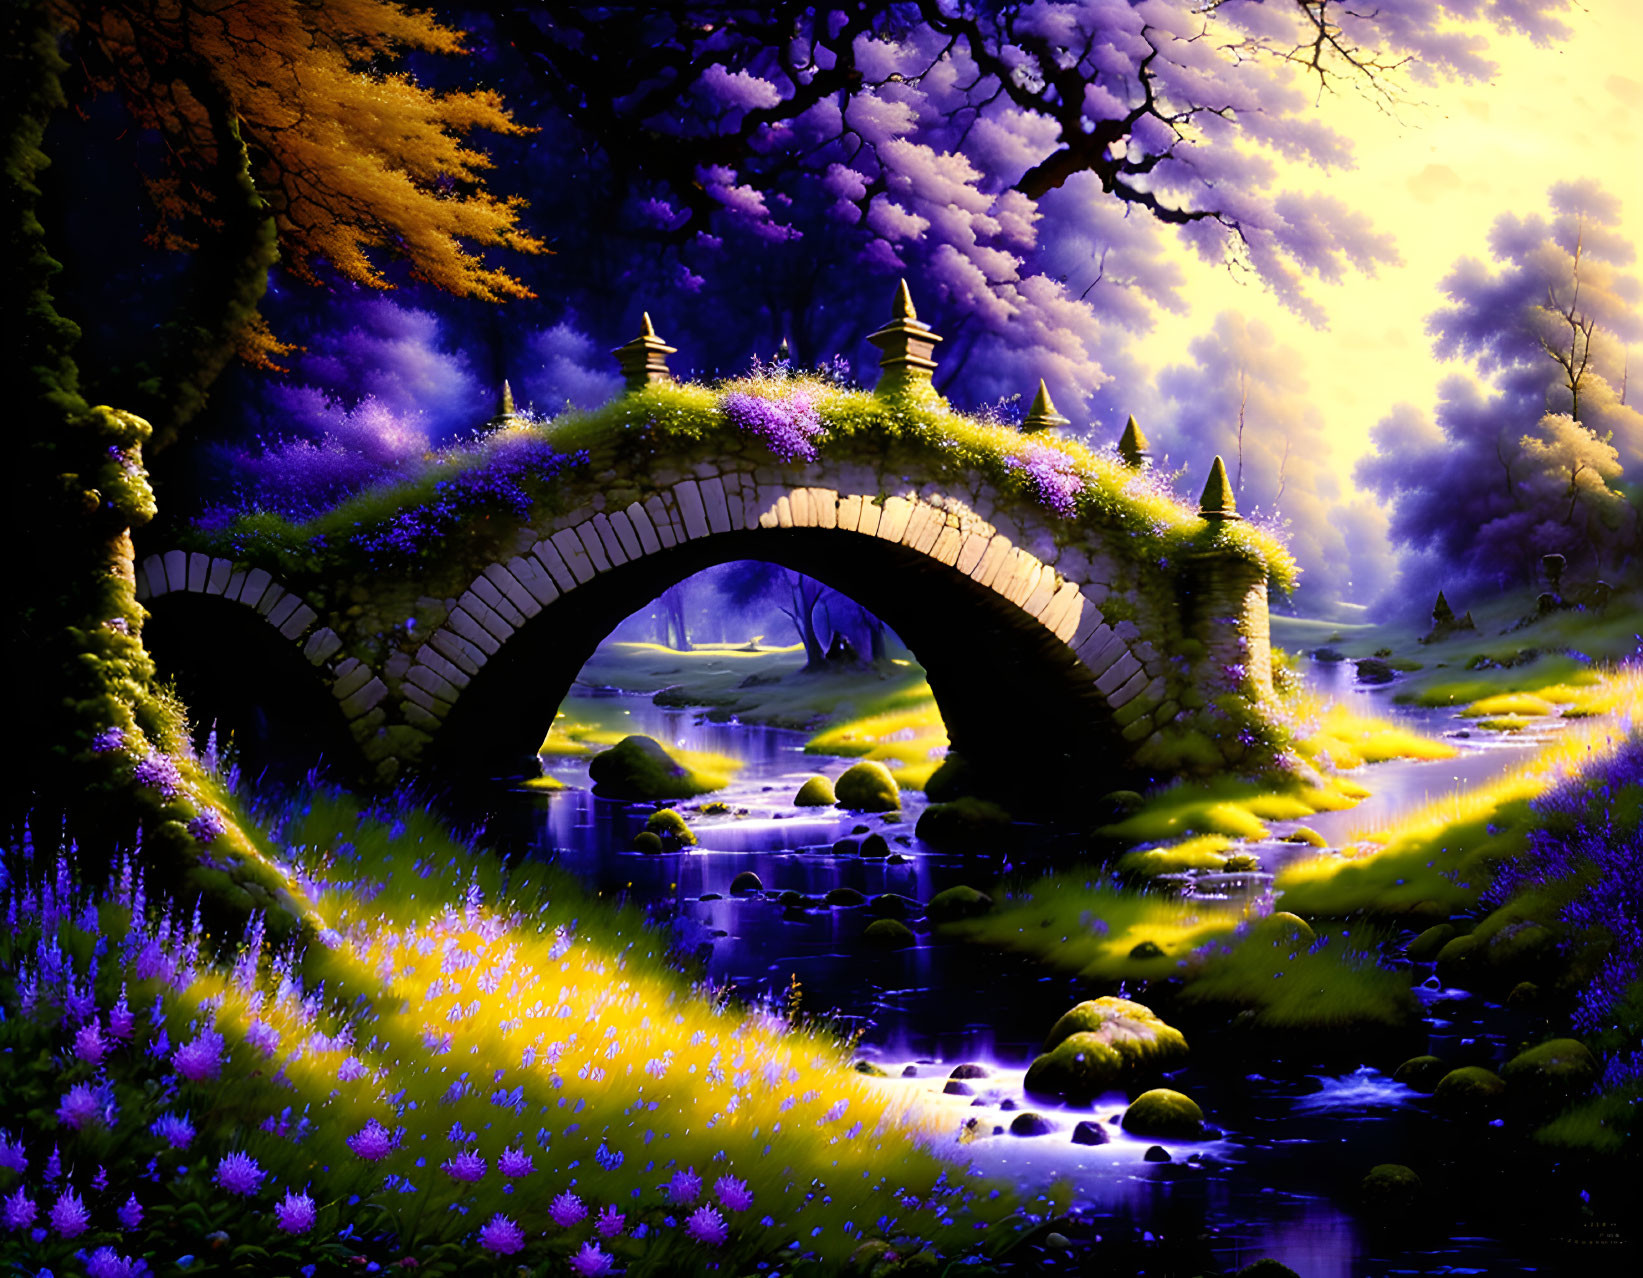 Serene river landscape with stone bridge and vibrant purple trees